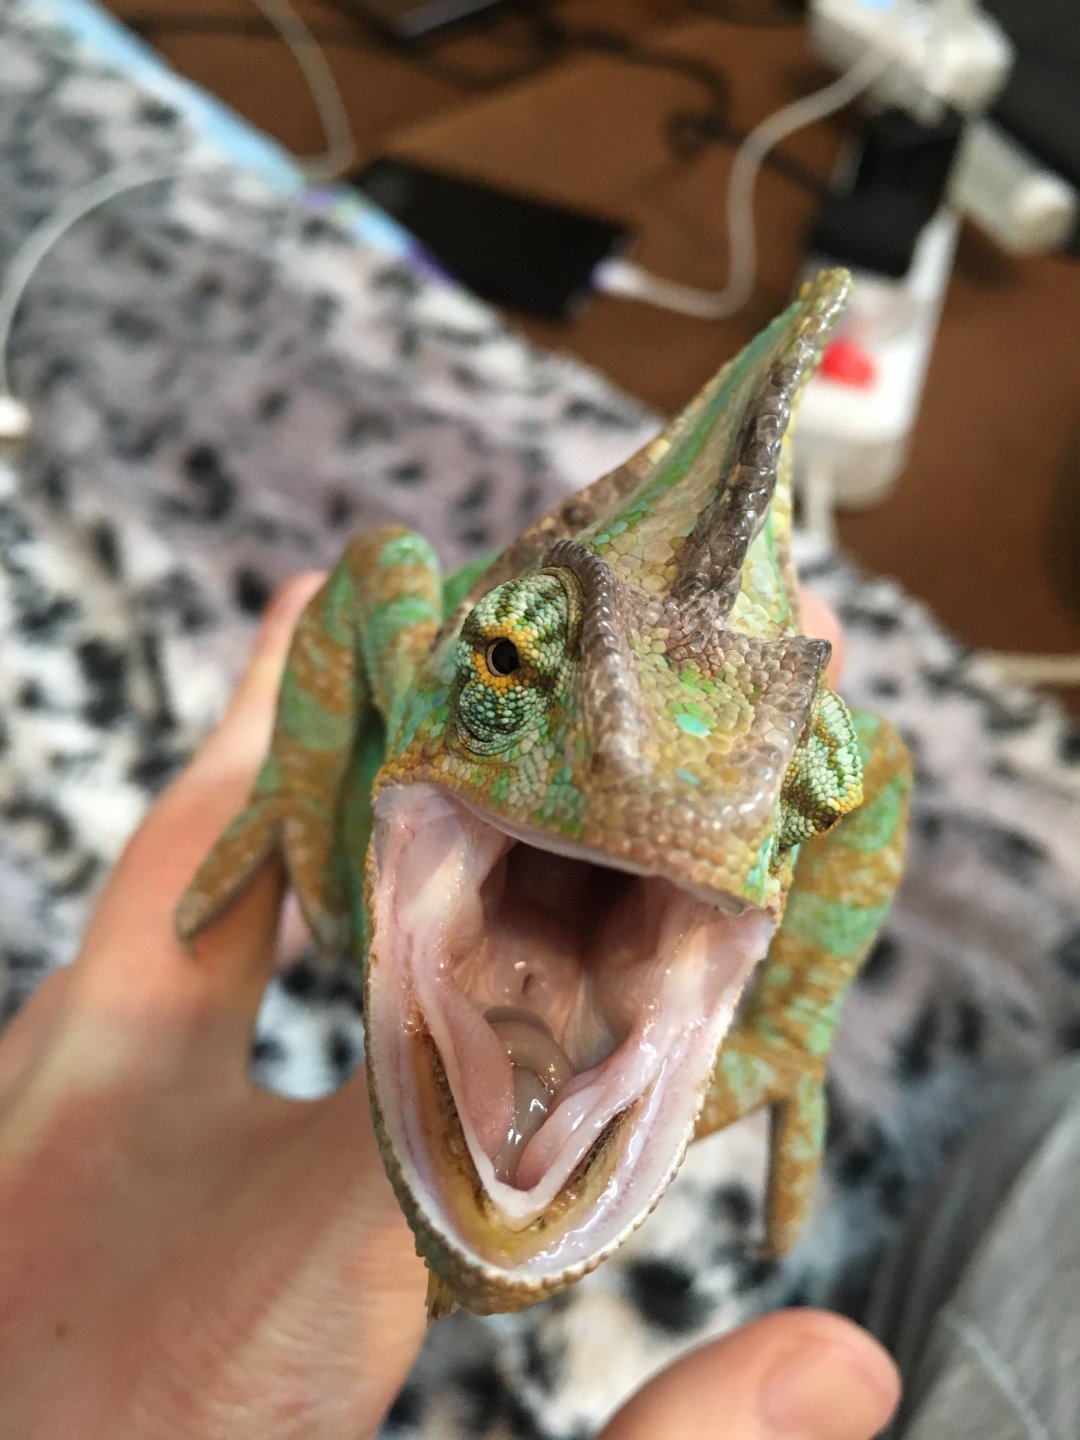 Chameleon mouth is strange | Chameleon Forums